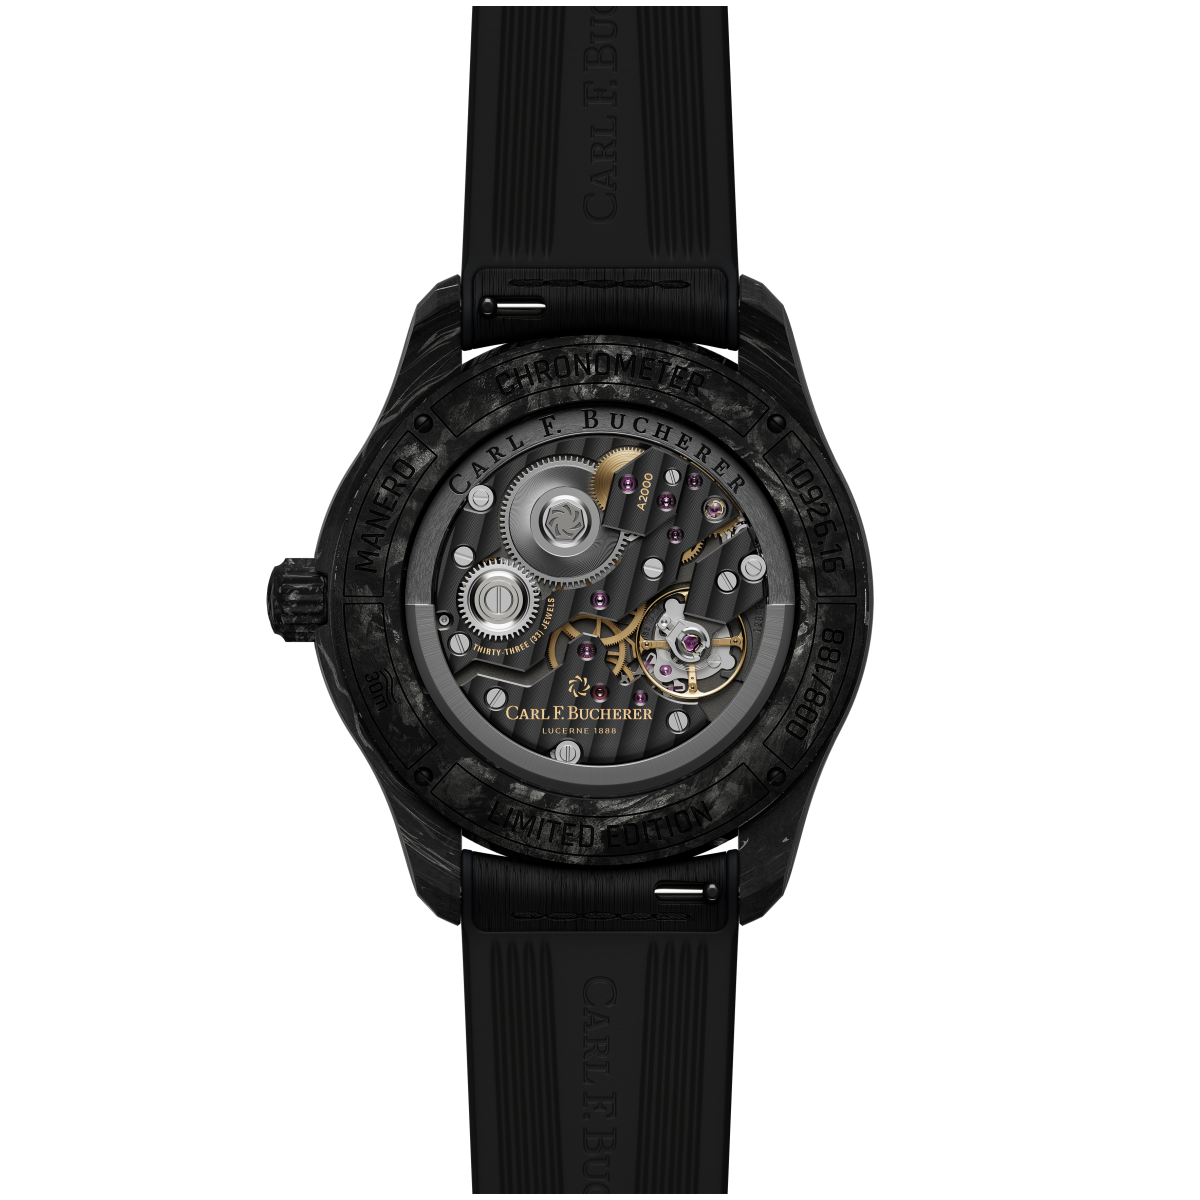 Carl F. Bucherer Manero Chronometer Carbon Limited Edition Men's Watch